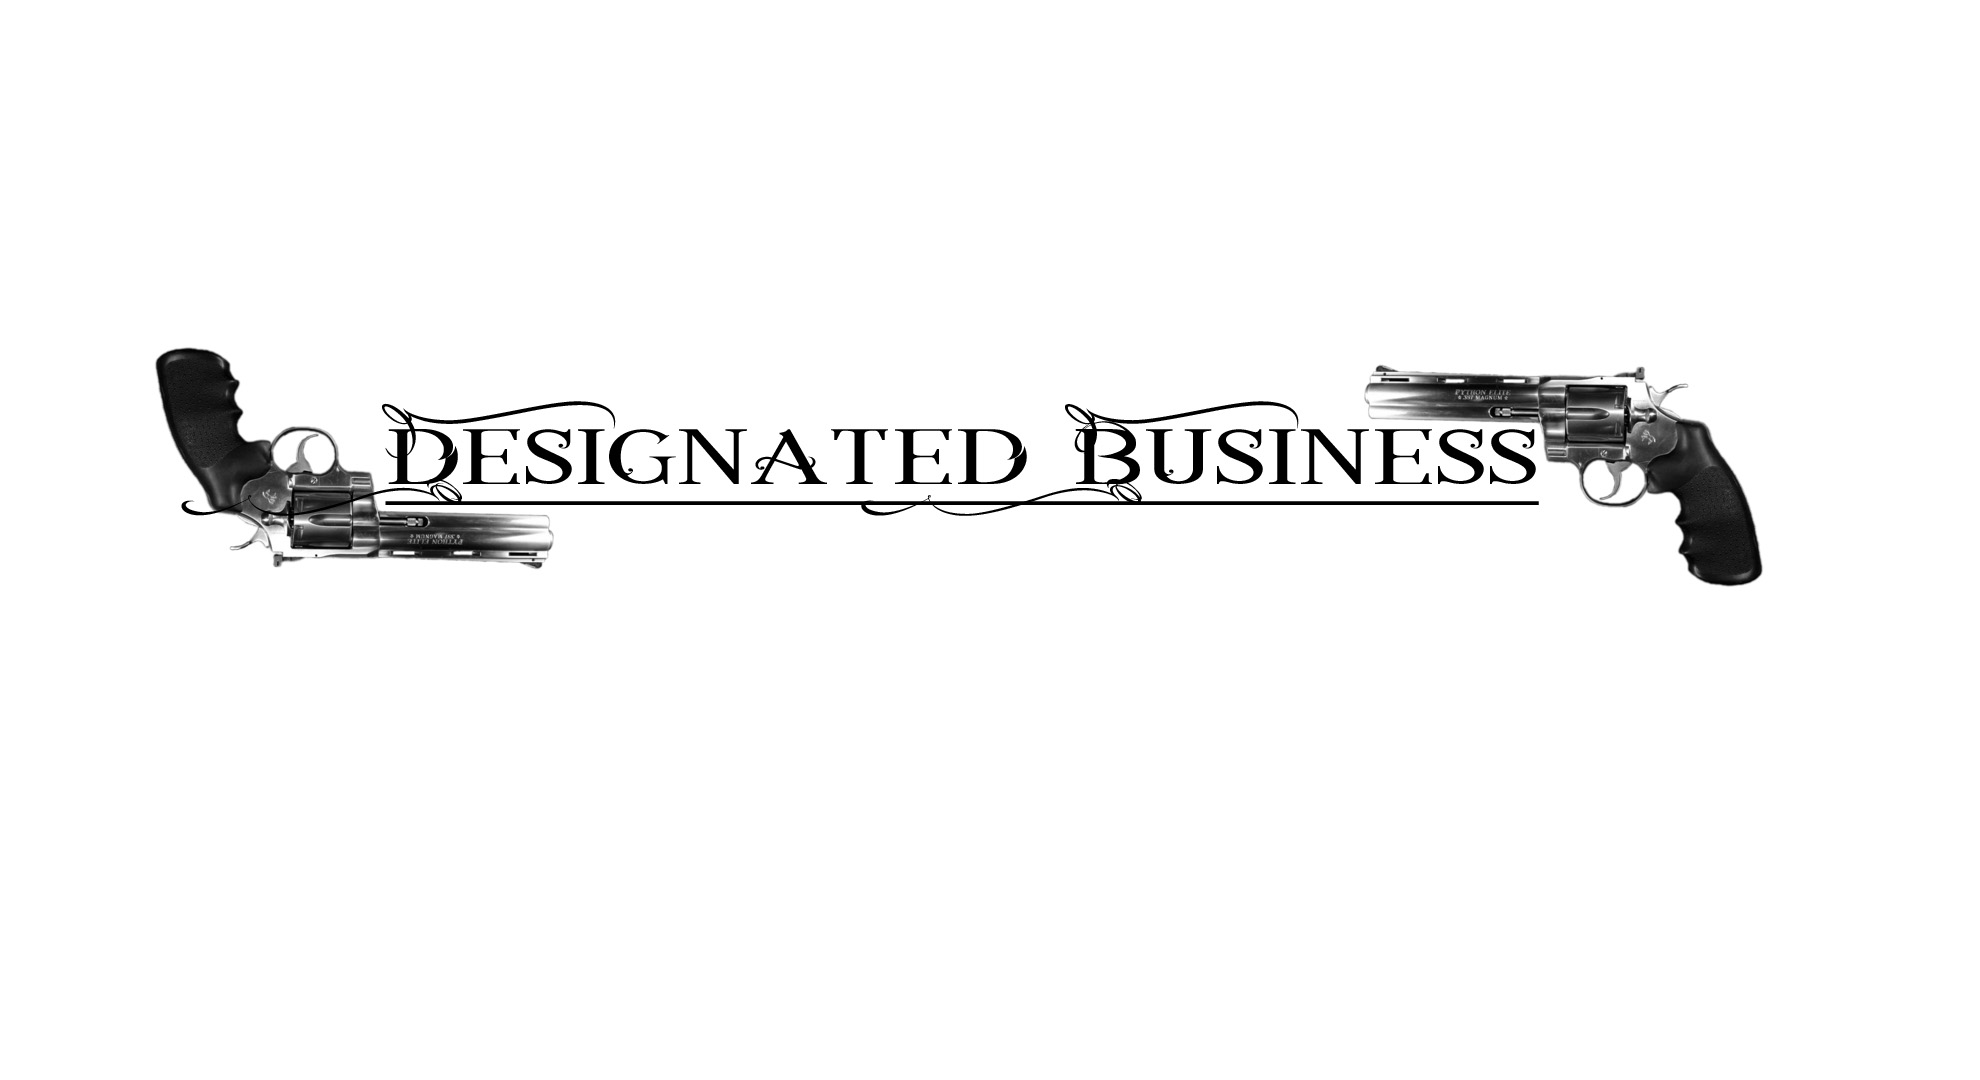 Designated Business - Optagelse